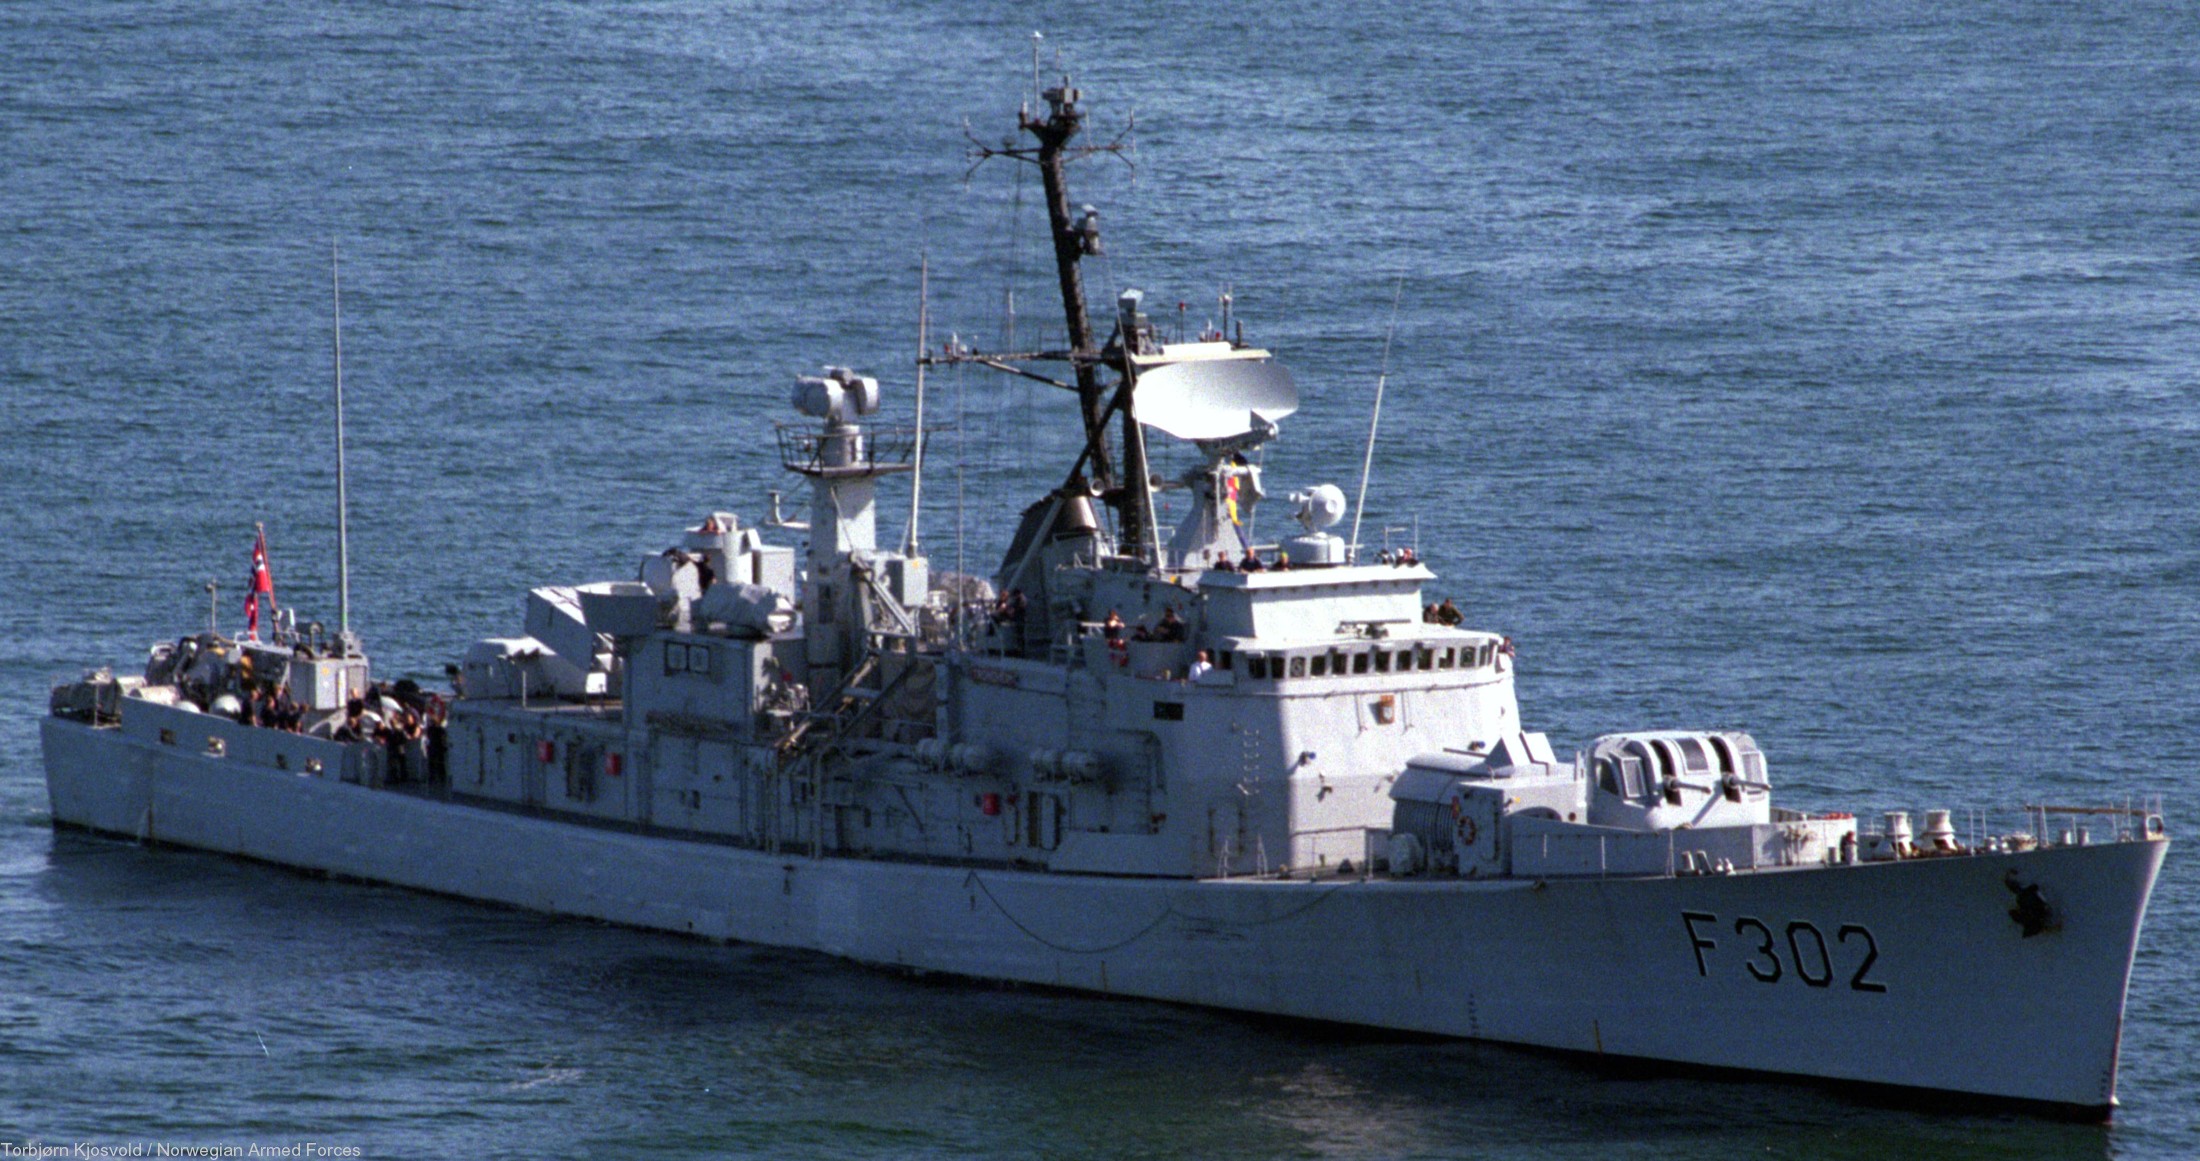 f-302 hnoms trondheim knm oslo class frigate royal norwegian navy sjoforsvaret 19x navy yard karljohansvern